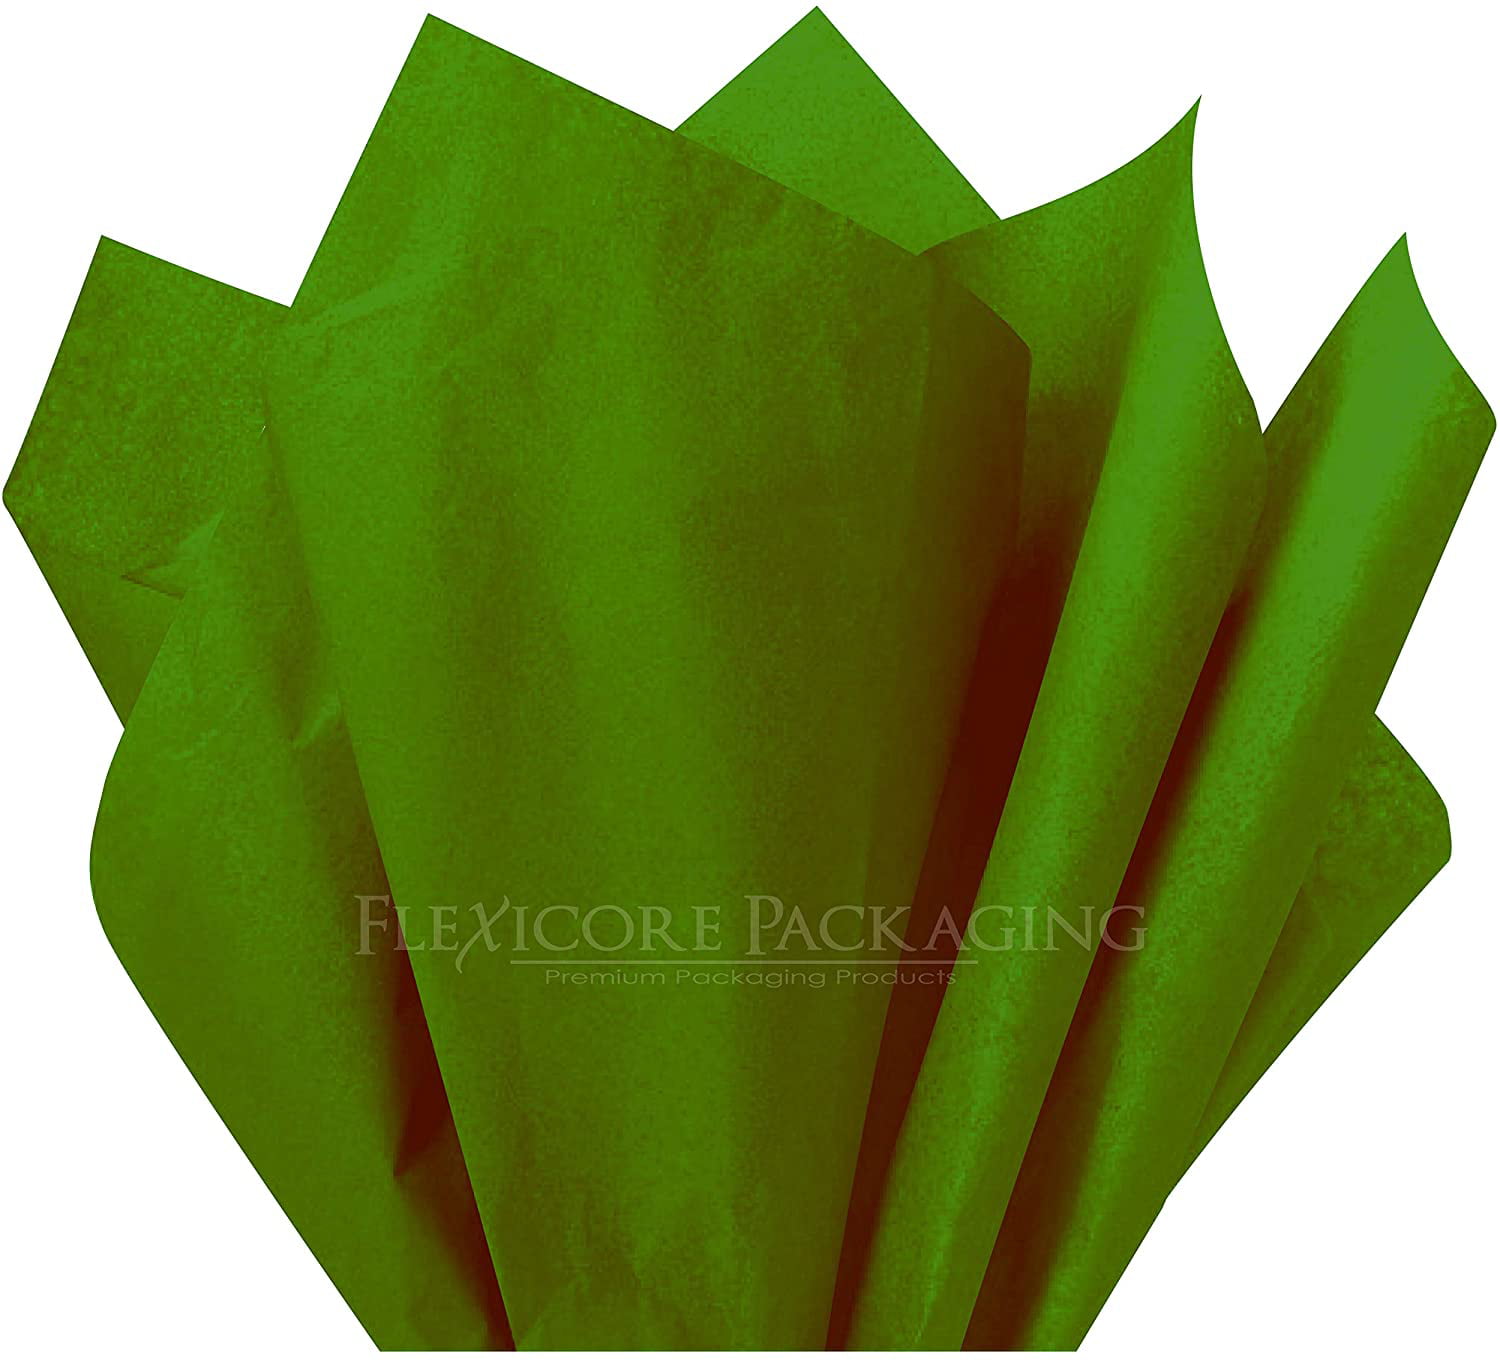 Flexicore Packaging Emerald Green Gift Wrap Tissue, (10 Rolls) 